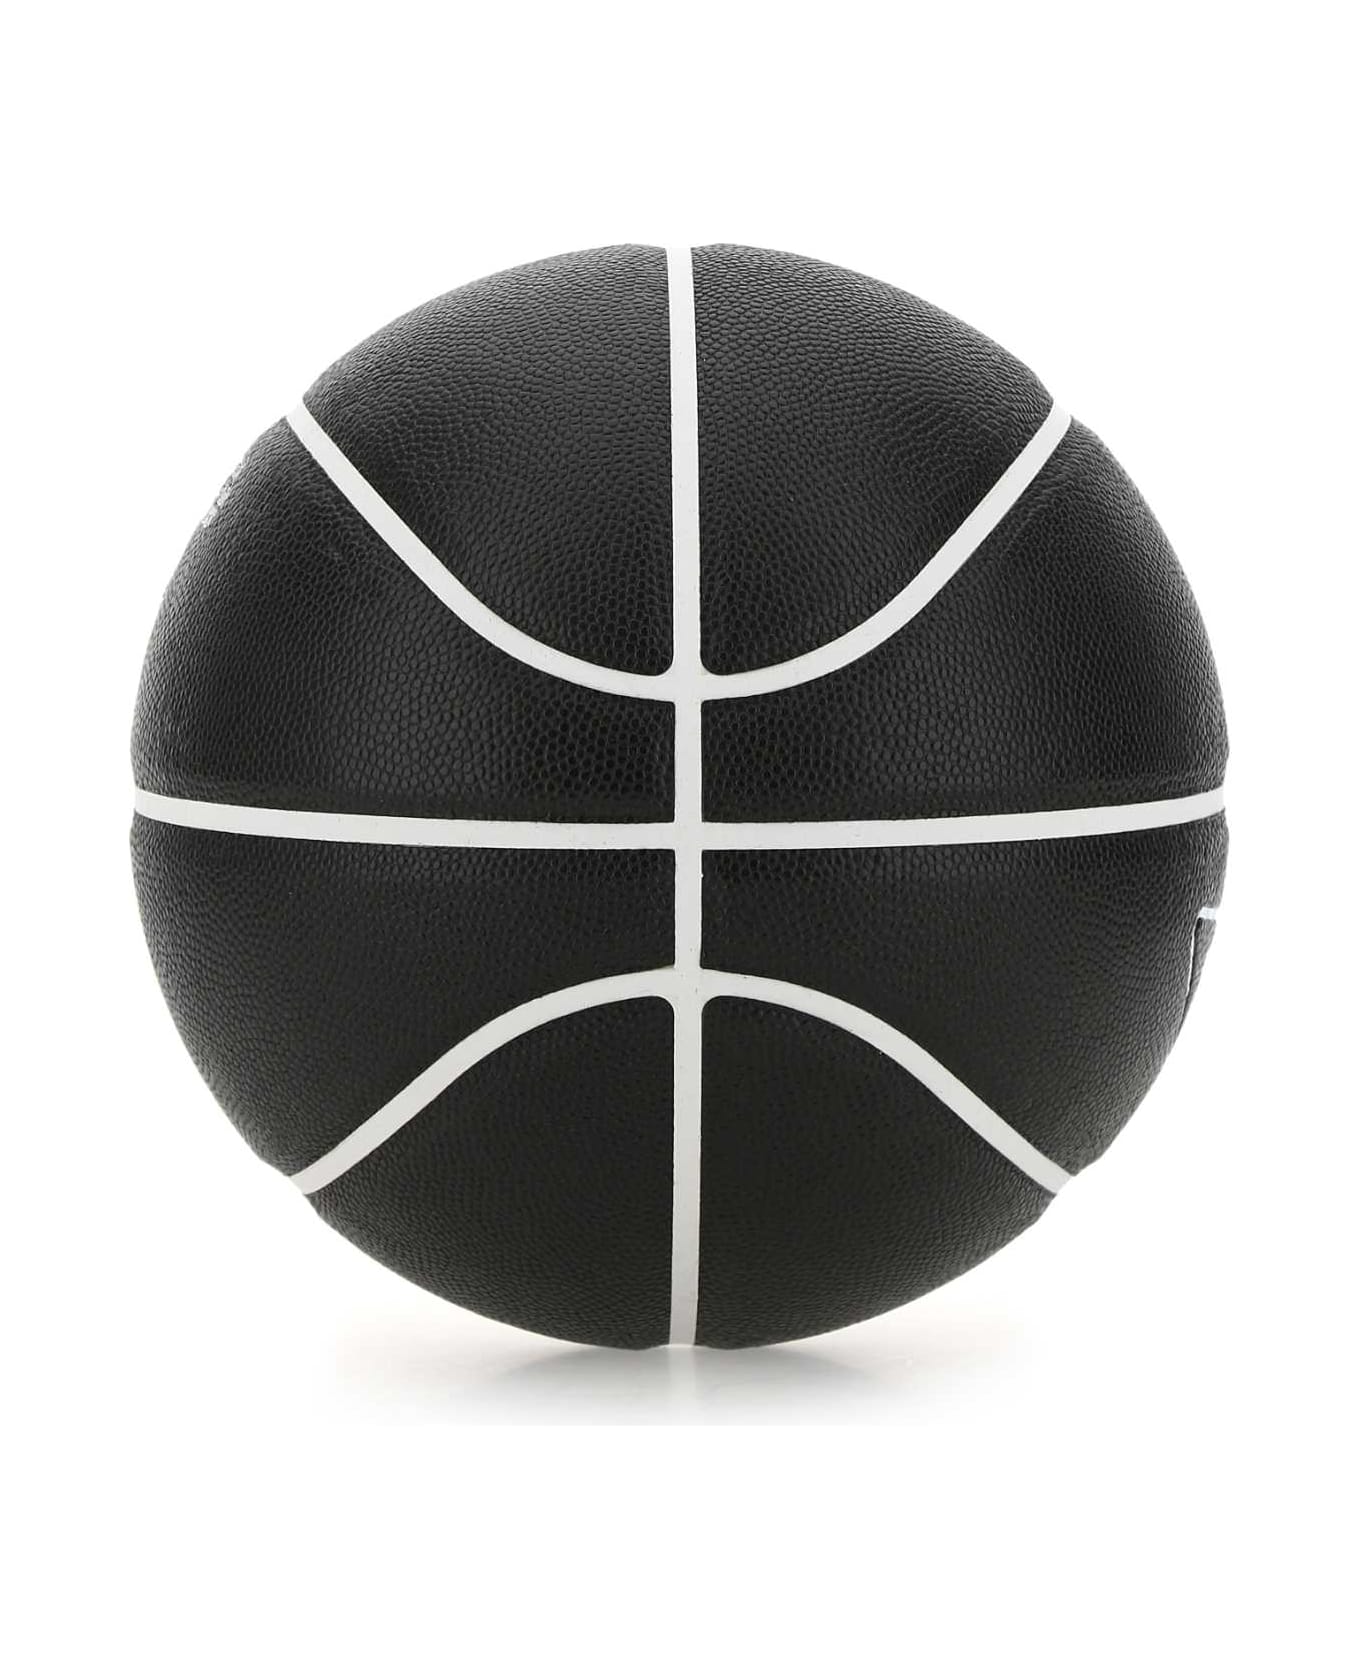 Prada Two-tone Rubber Basket Ball - F0002 インテリア雑貨